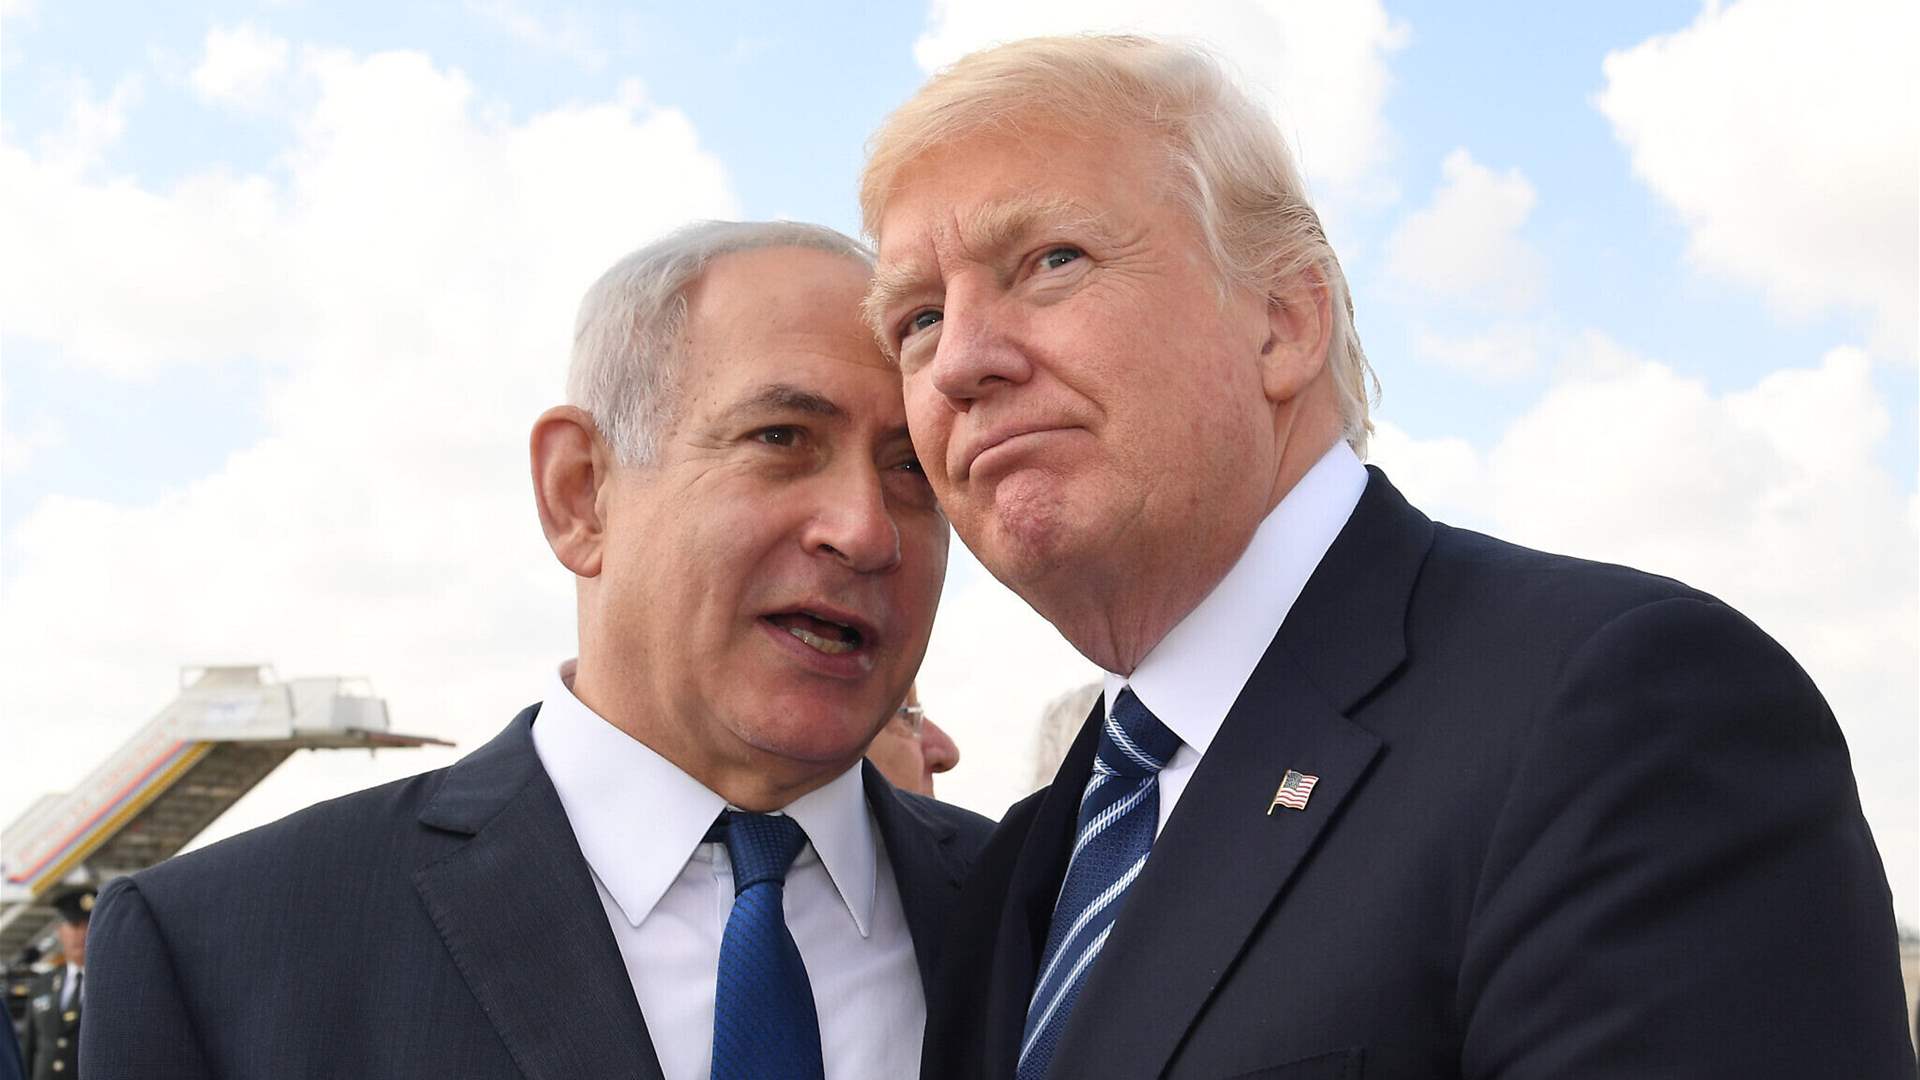 Trump to meet Israeli PM in Florida on Friday